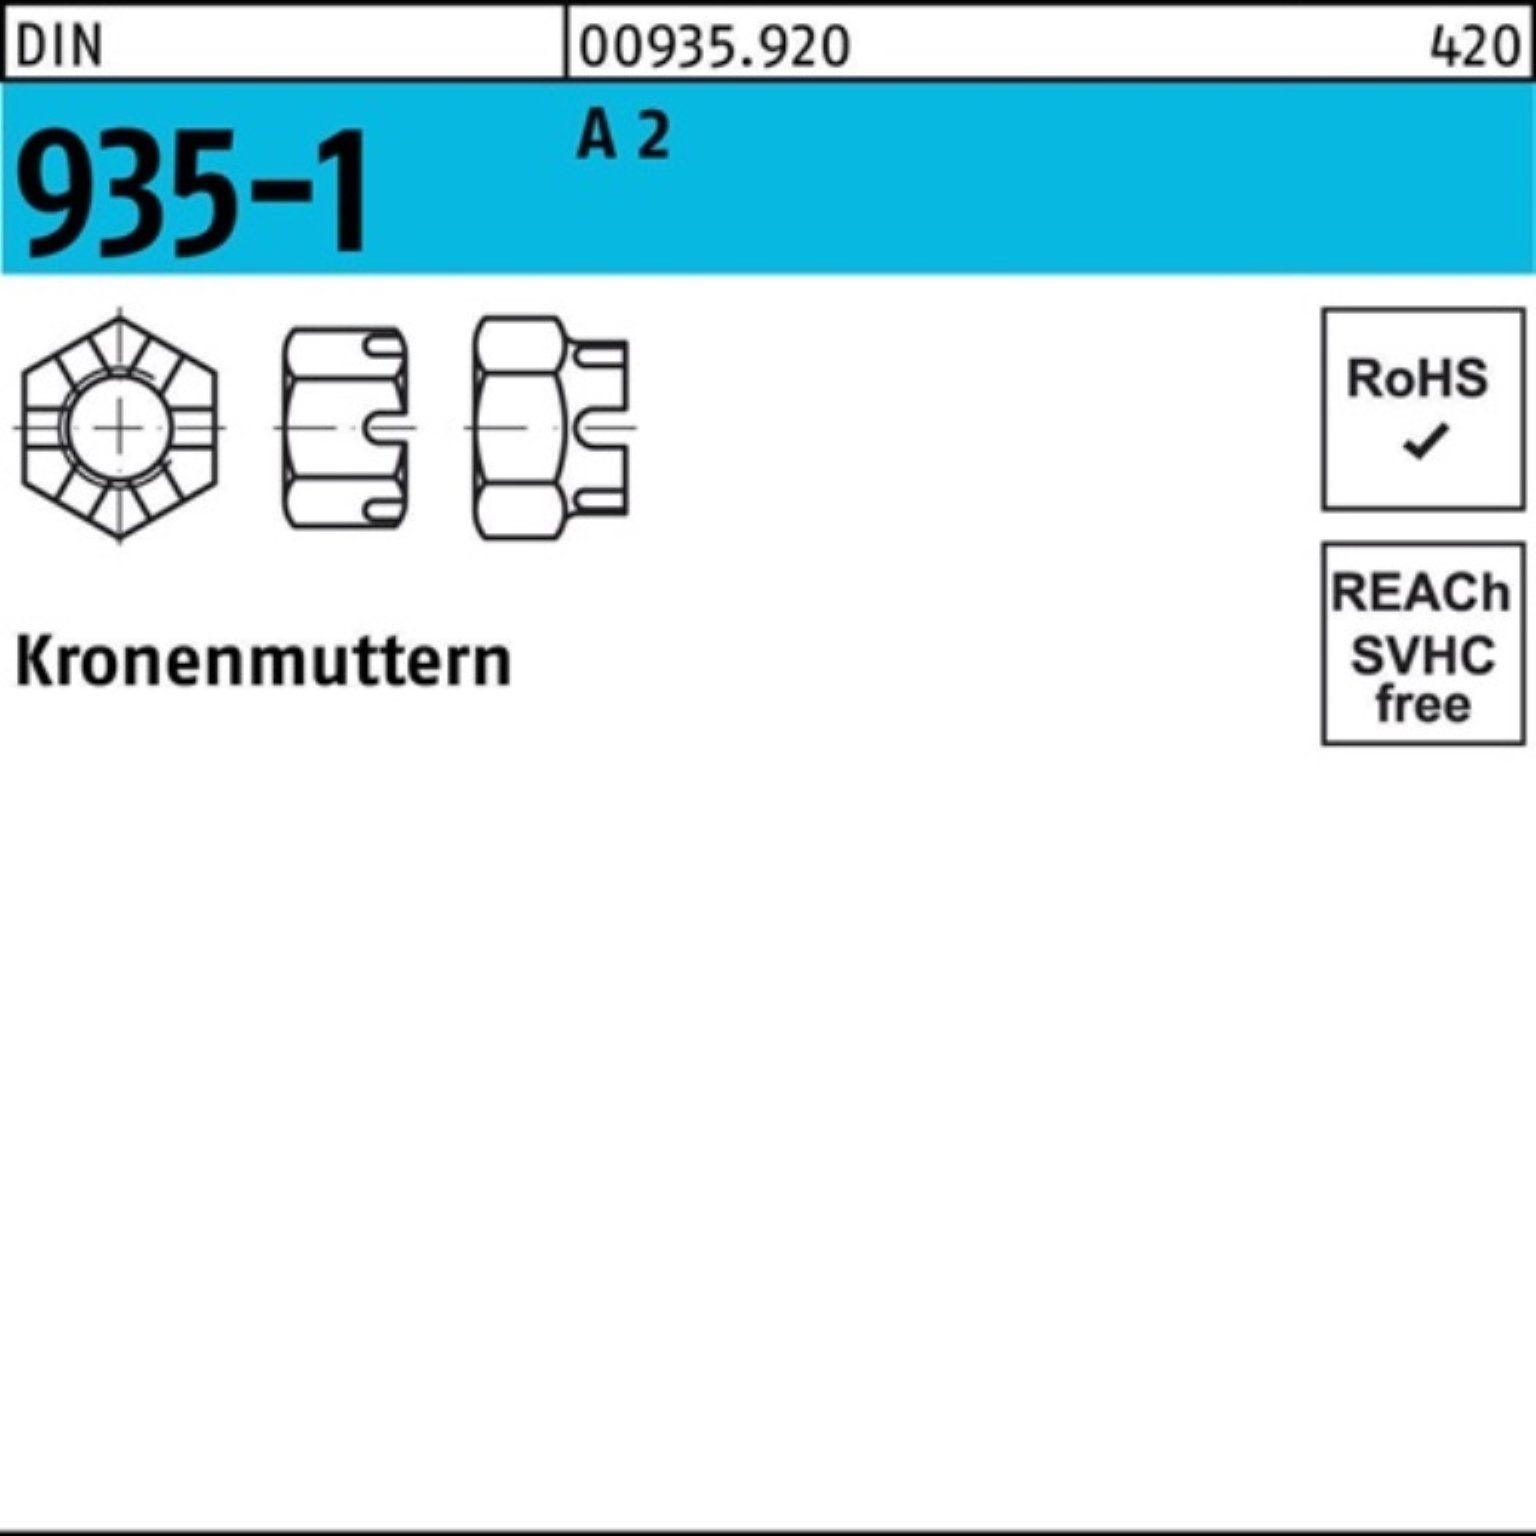 Reyher Kronenmutter 100er Pack Kronenmutter DIN 935-1 M24 A 2 1 Stück DIN 935-1 A 2 Krone